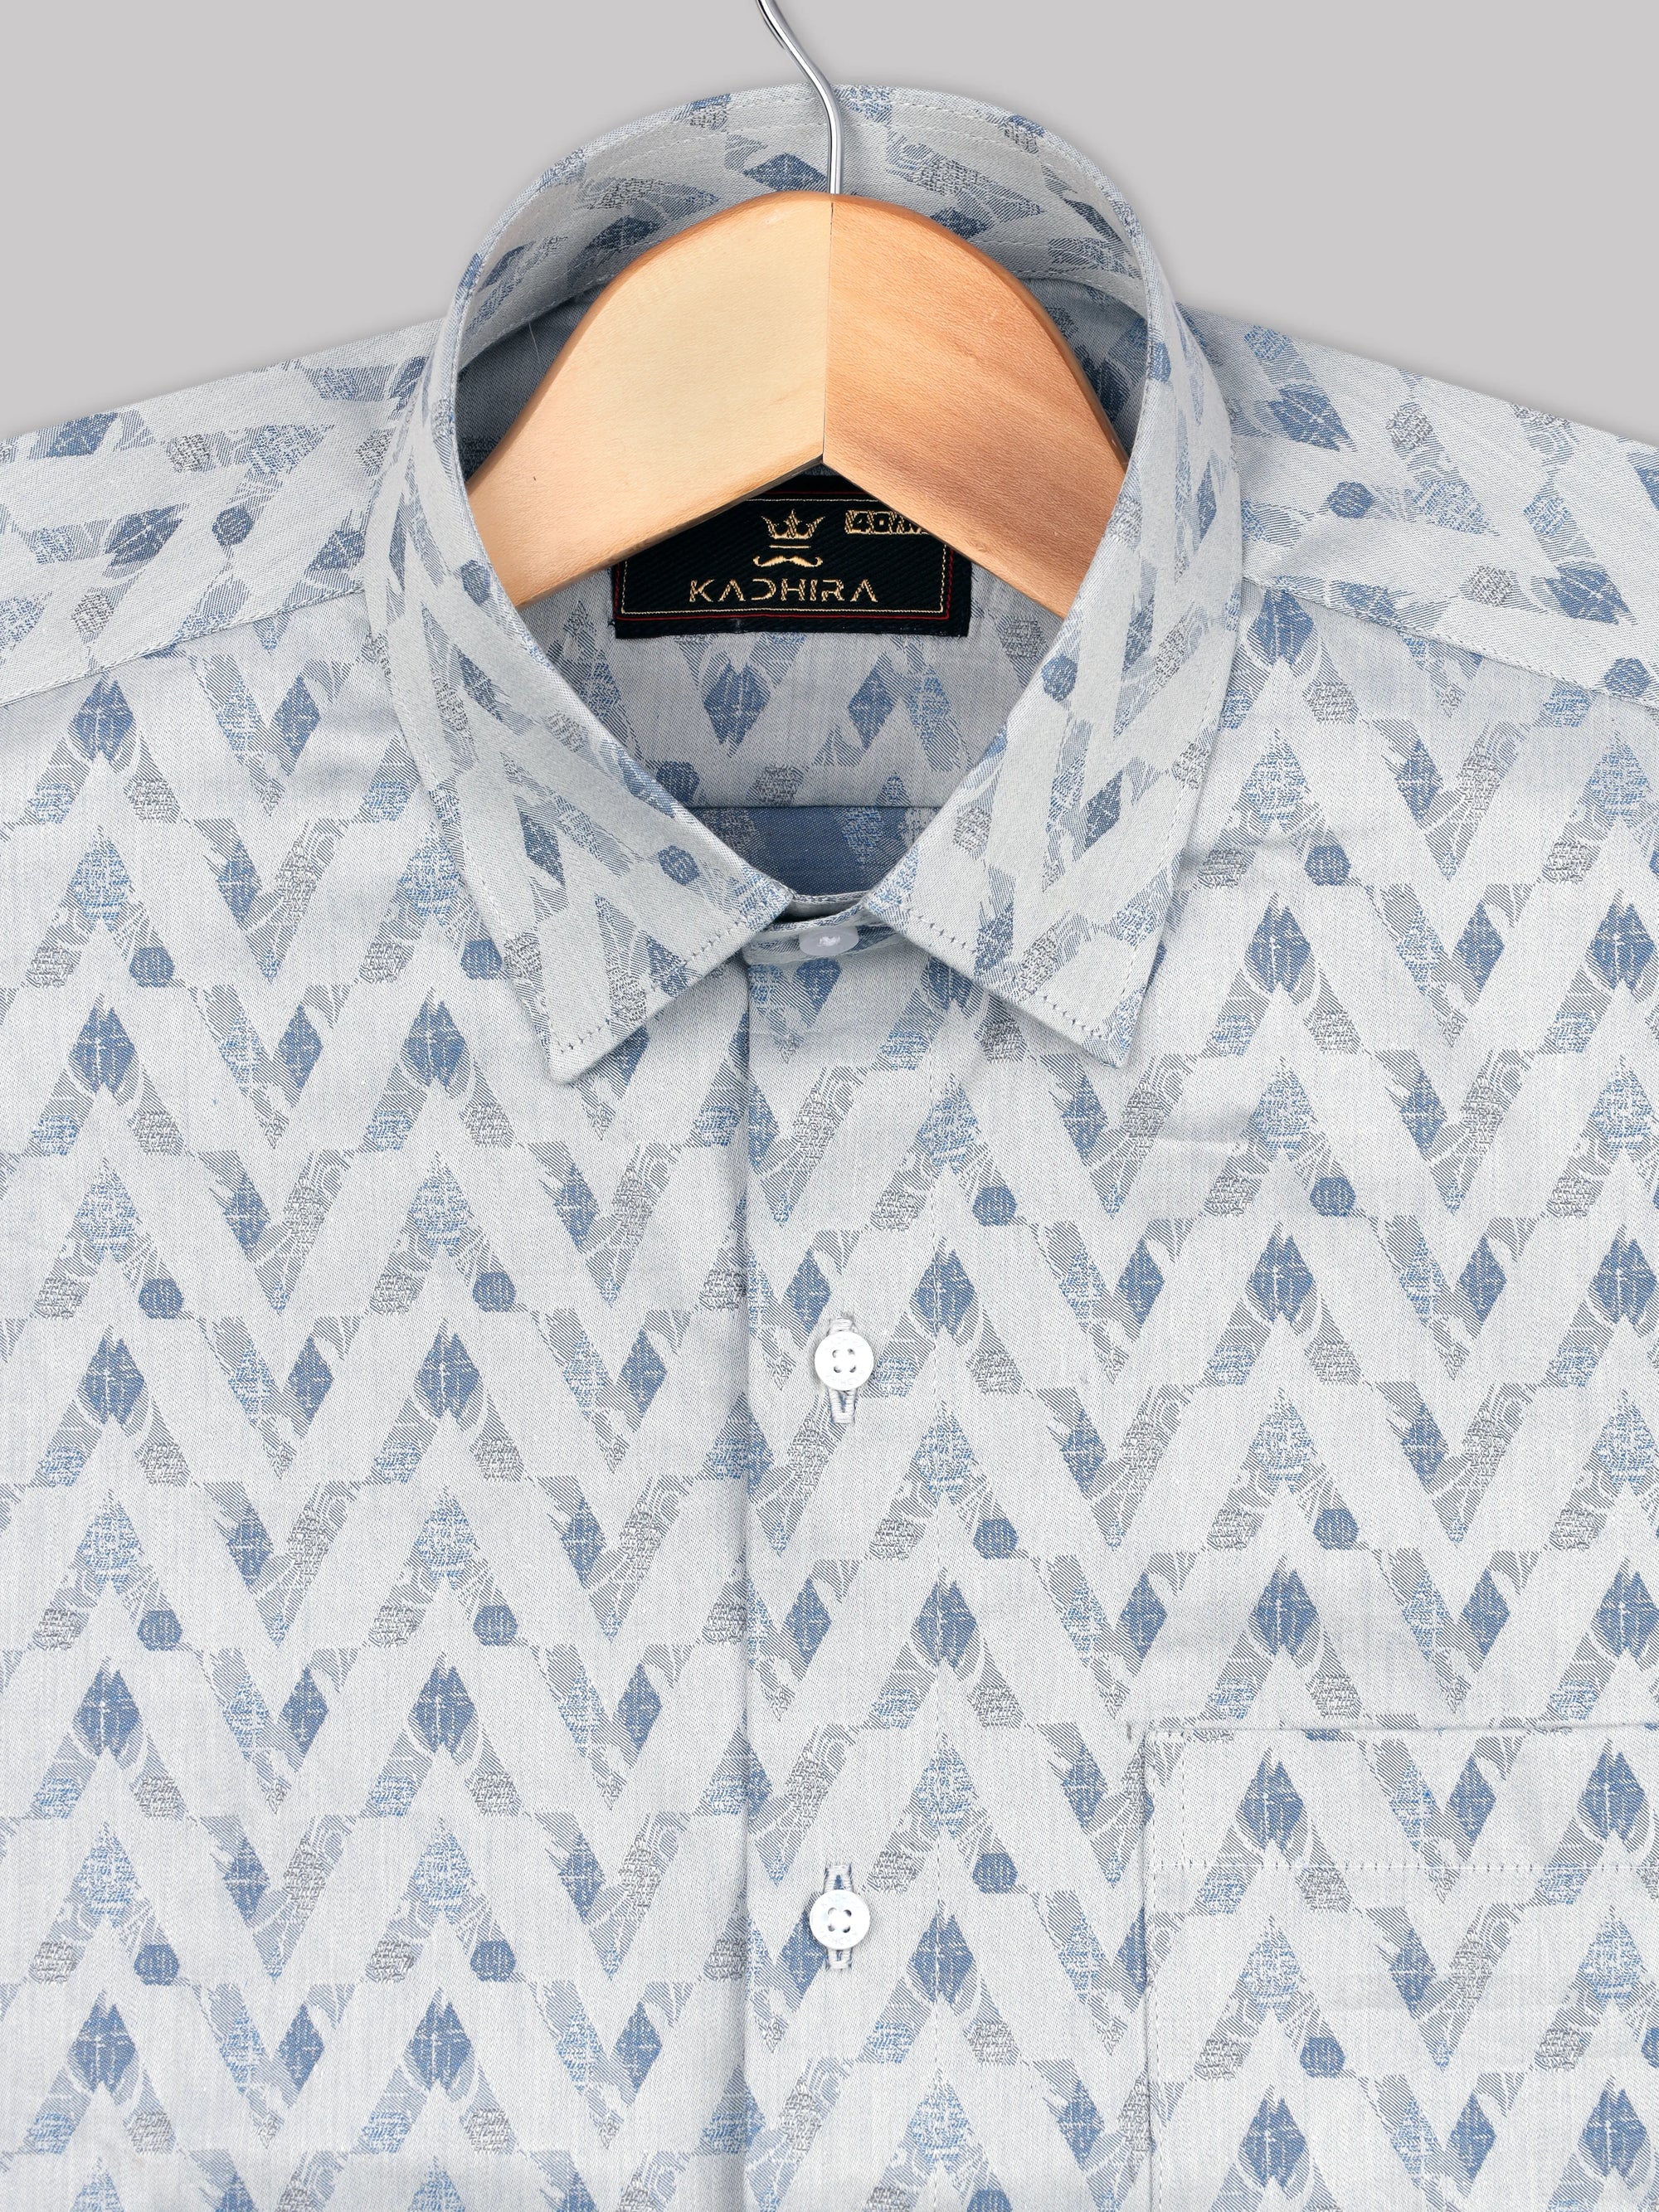 Light Gray With Blue V-Shape Seamless Jacquard Premium Cotton Shirt